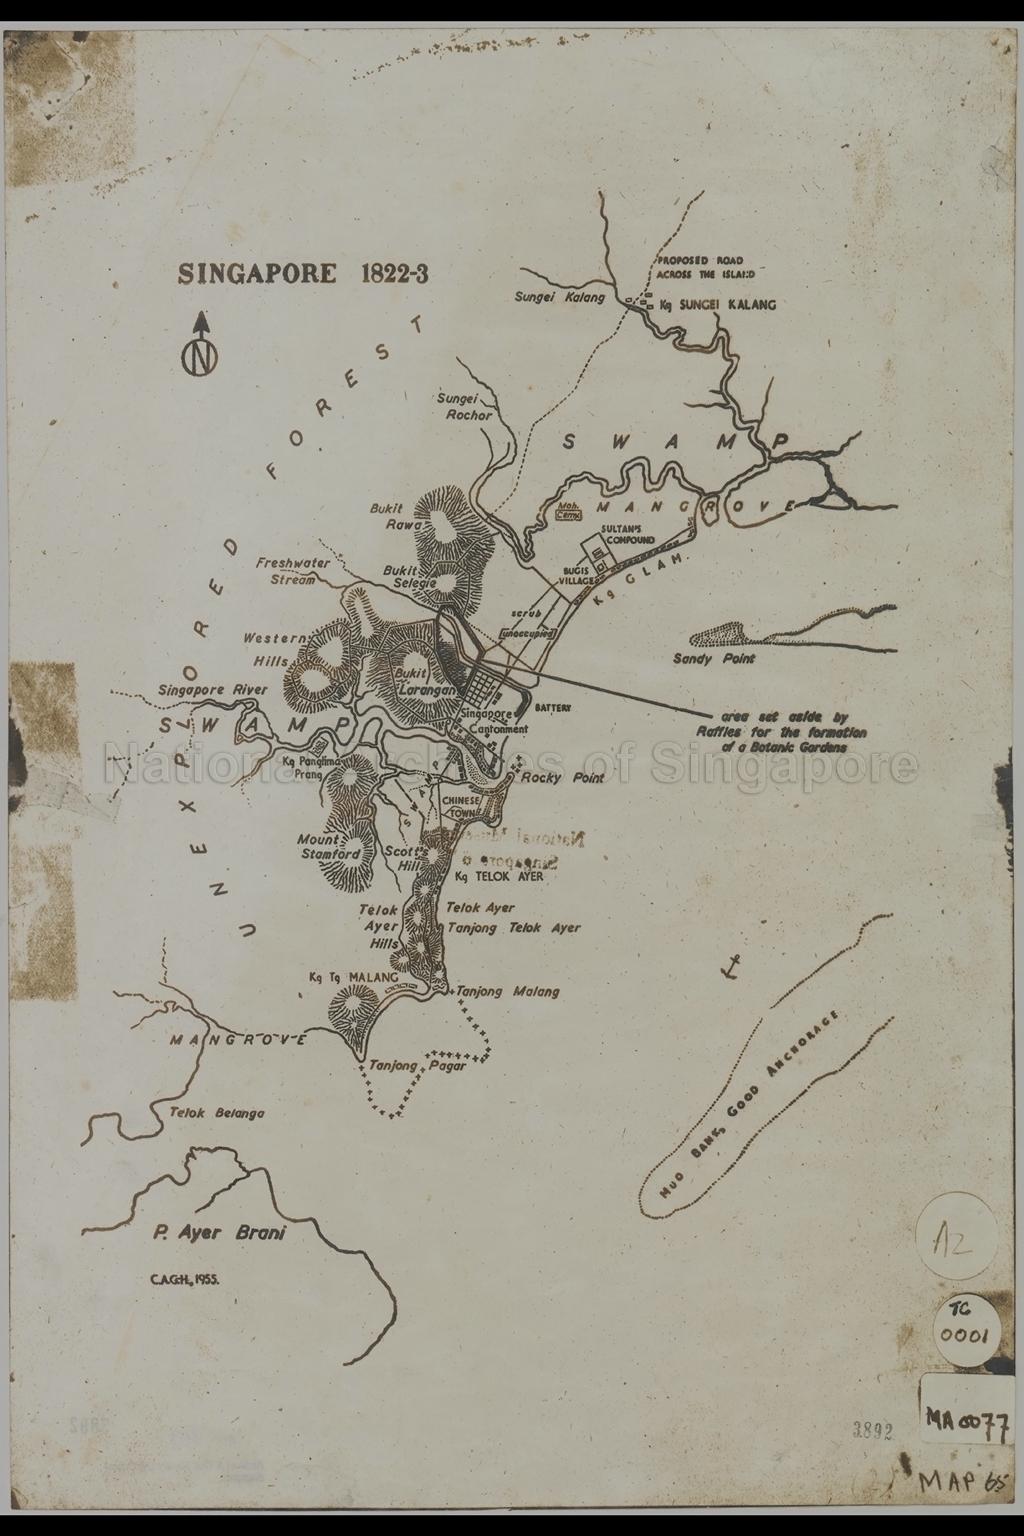 Singapore 1822-3